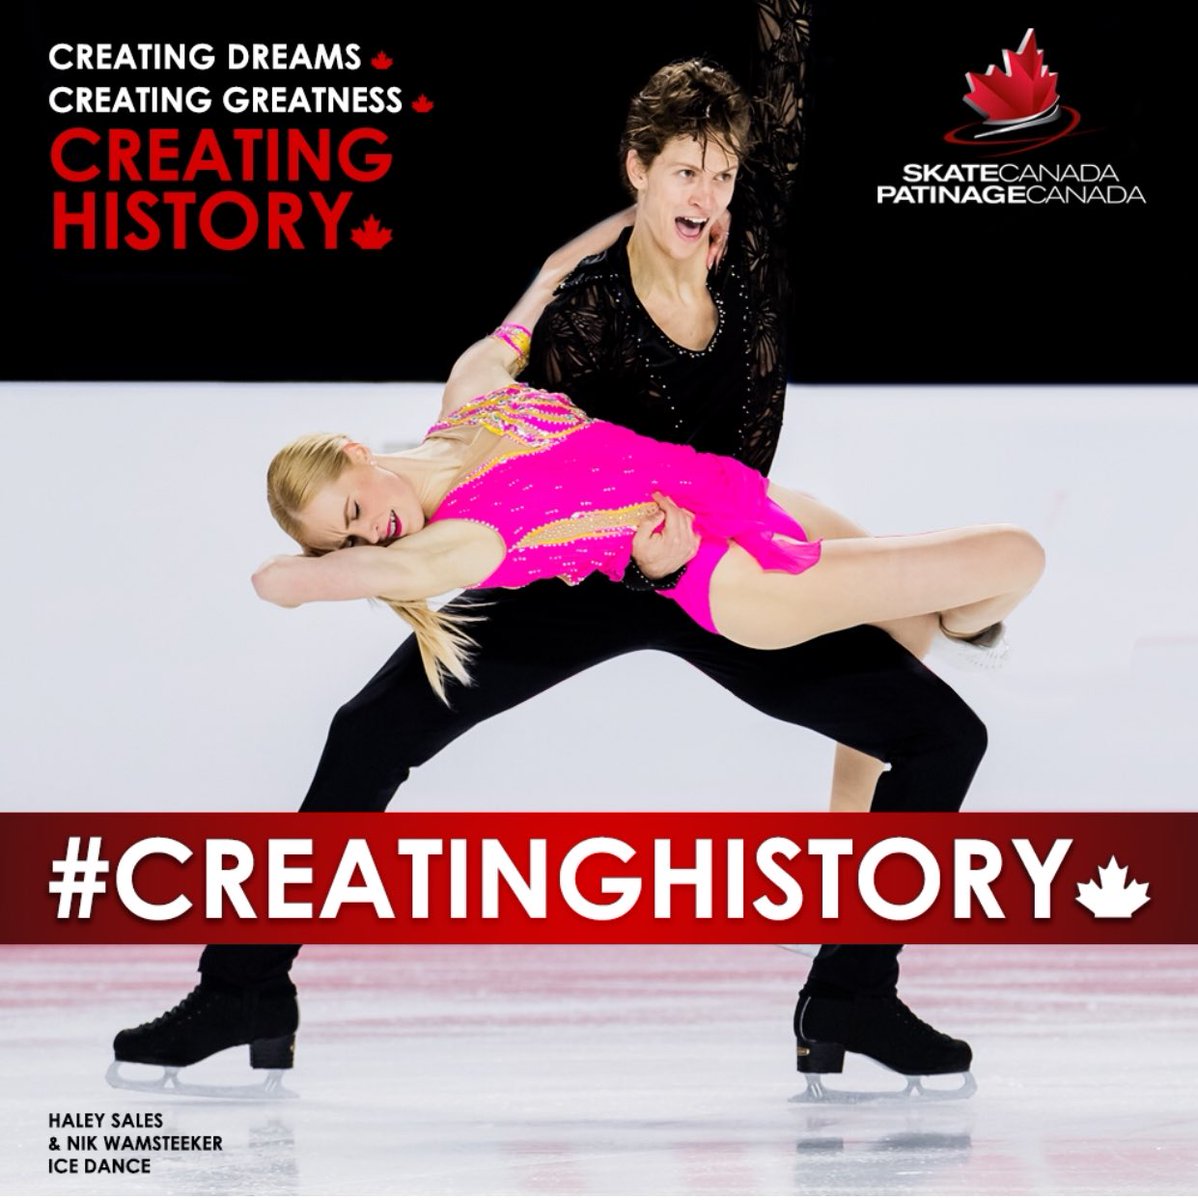 Creating Dreams, Creating Greatness, #CreatingHistory 🇨🇦❤️